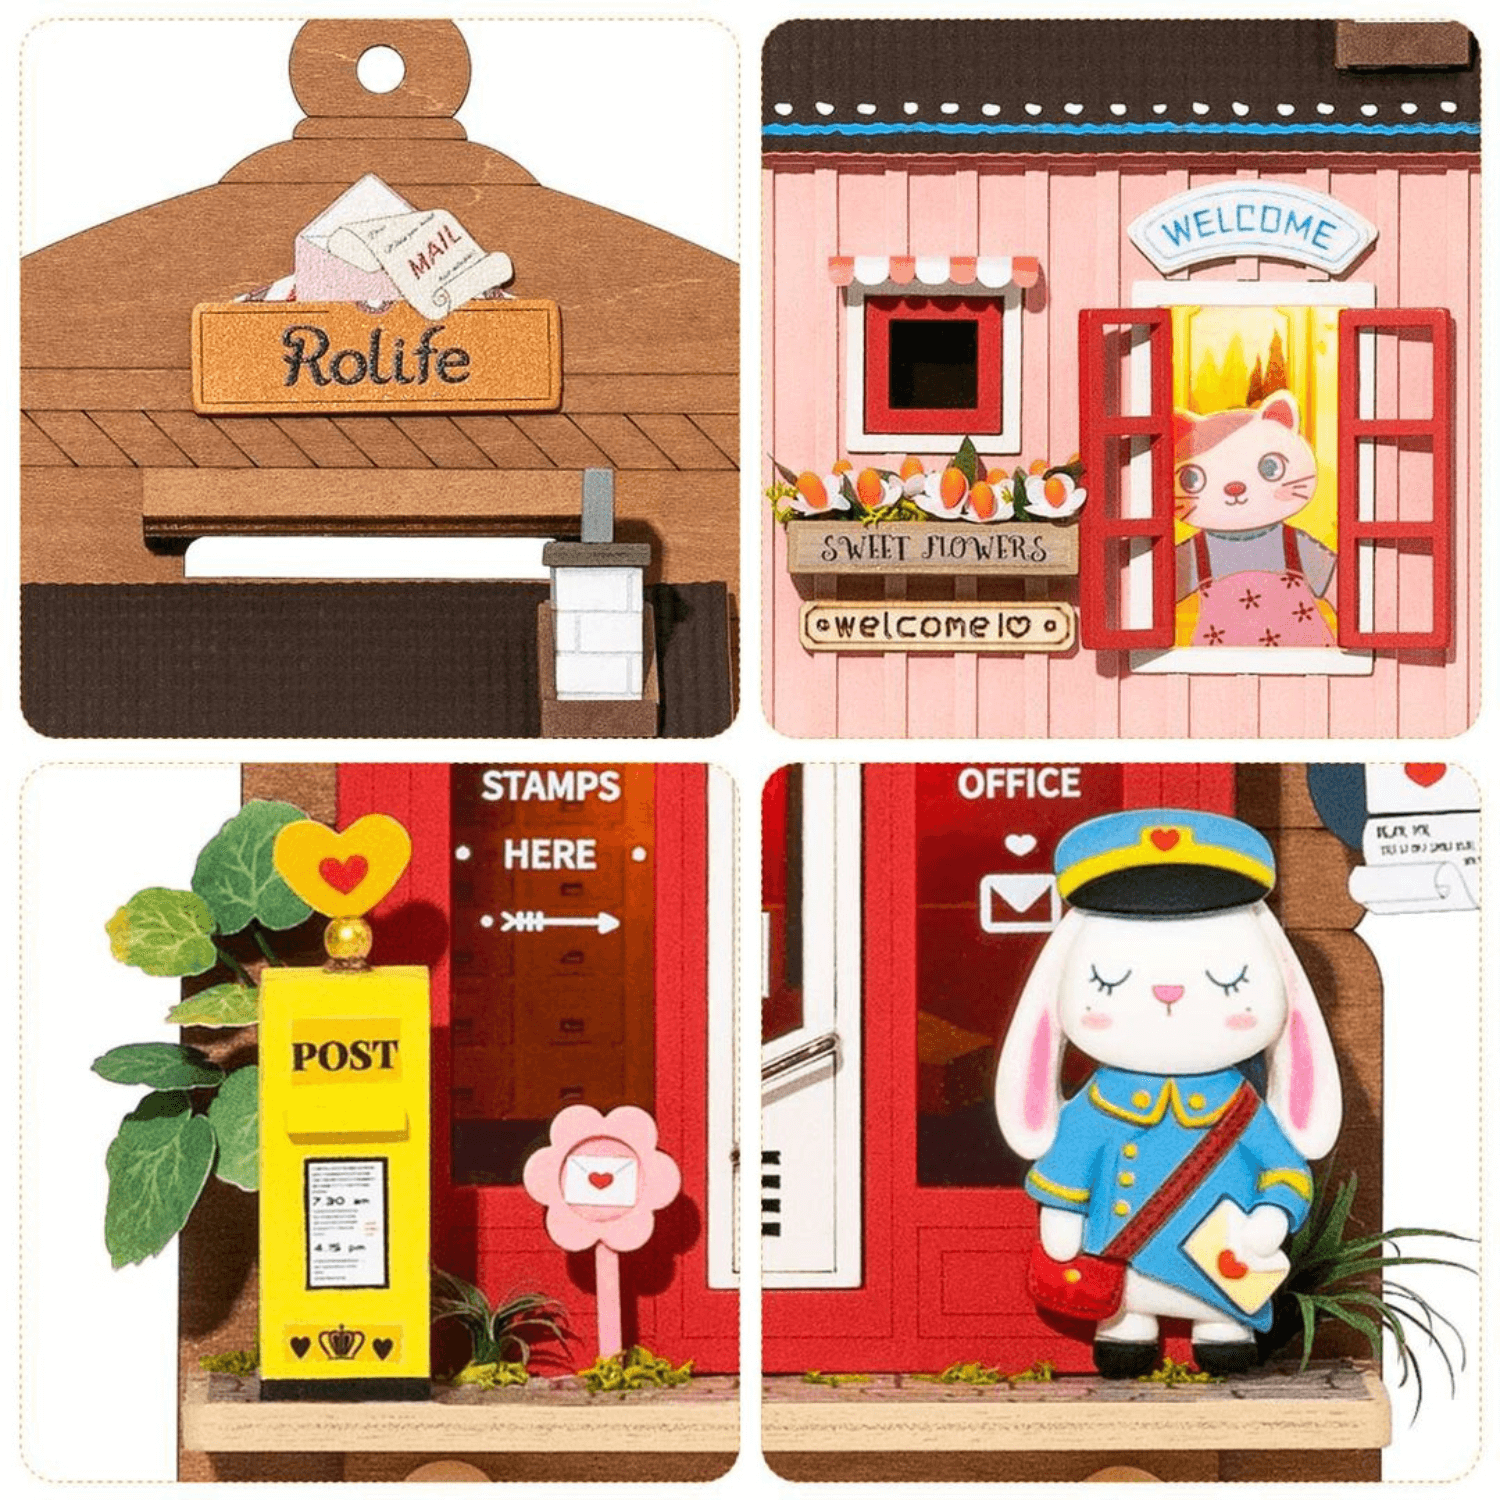 Love Post Office | Miniature House | Rolife Miniature House Robotime--